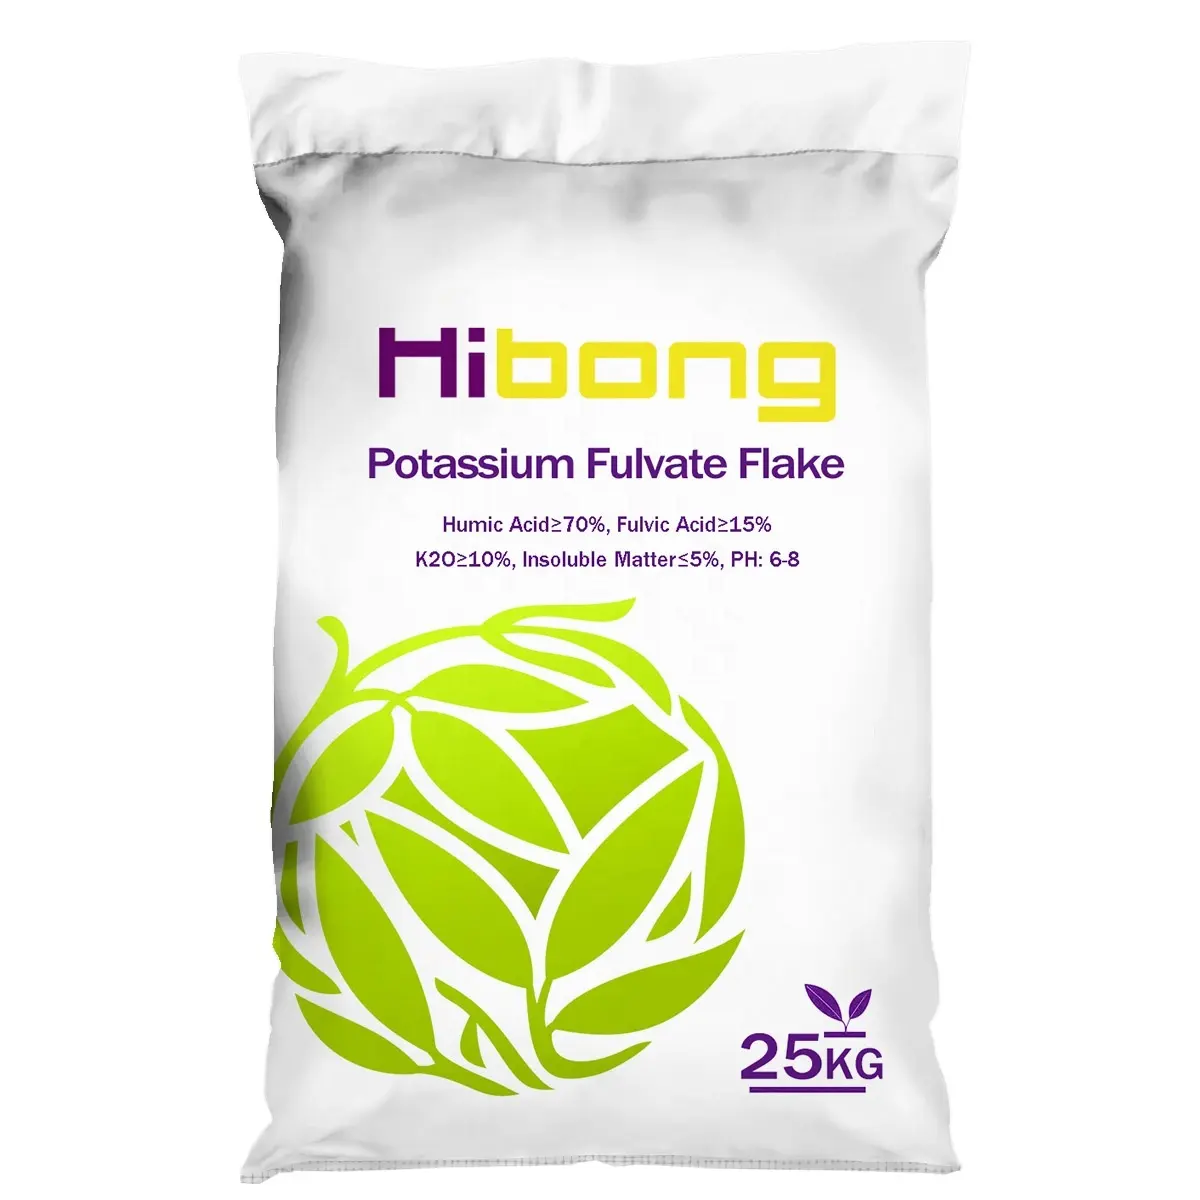 Pupuk organik butiran potasium Humate serpihan berkilau bubuk agrokimia Agricolas untuk pertanian